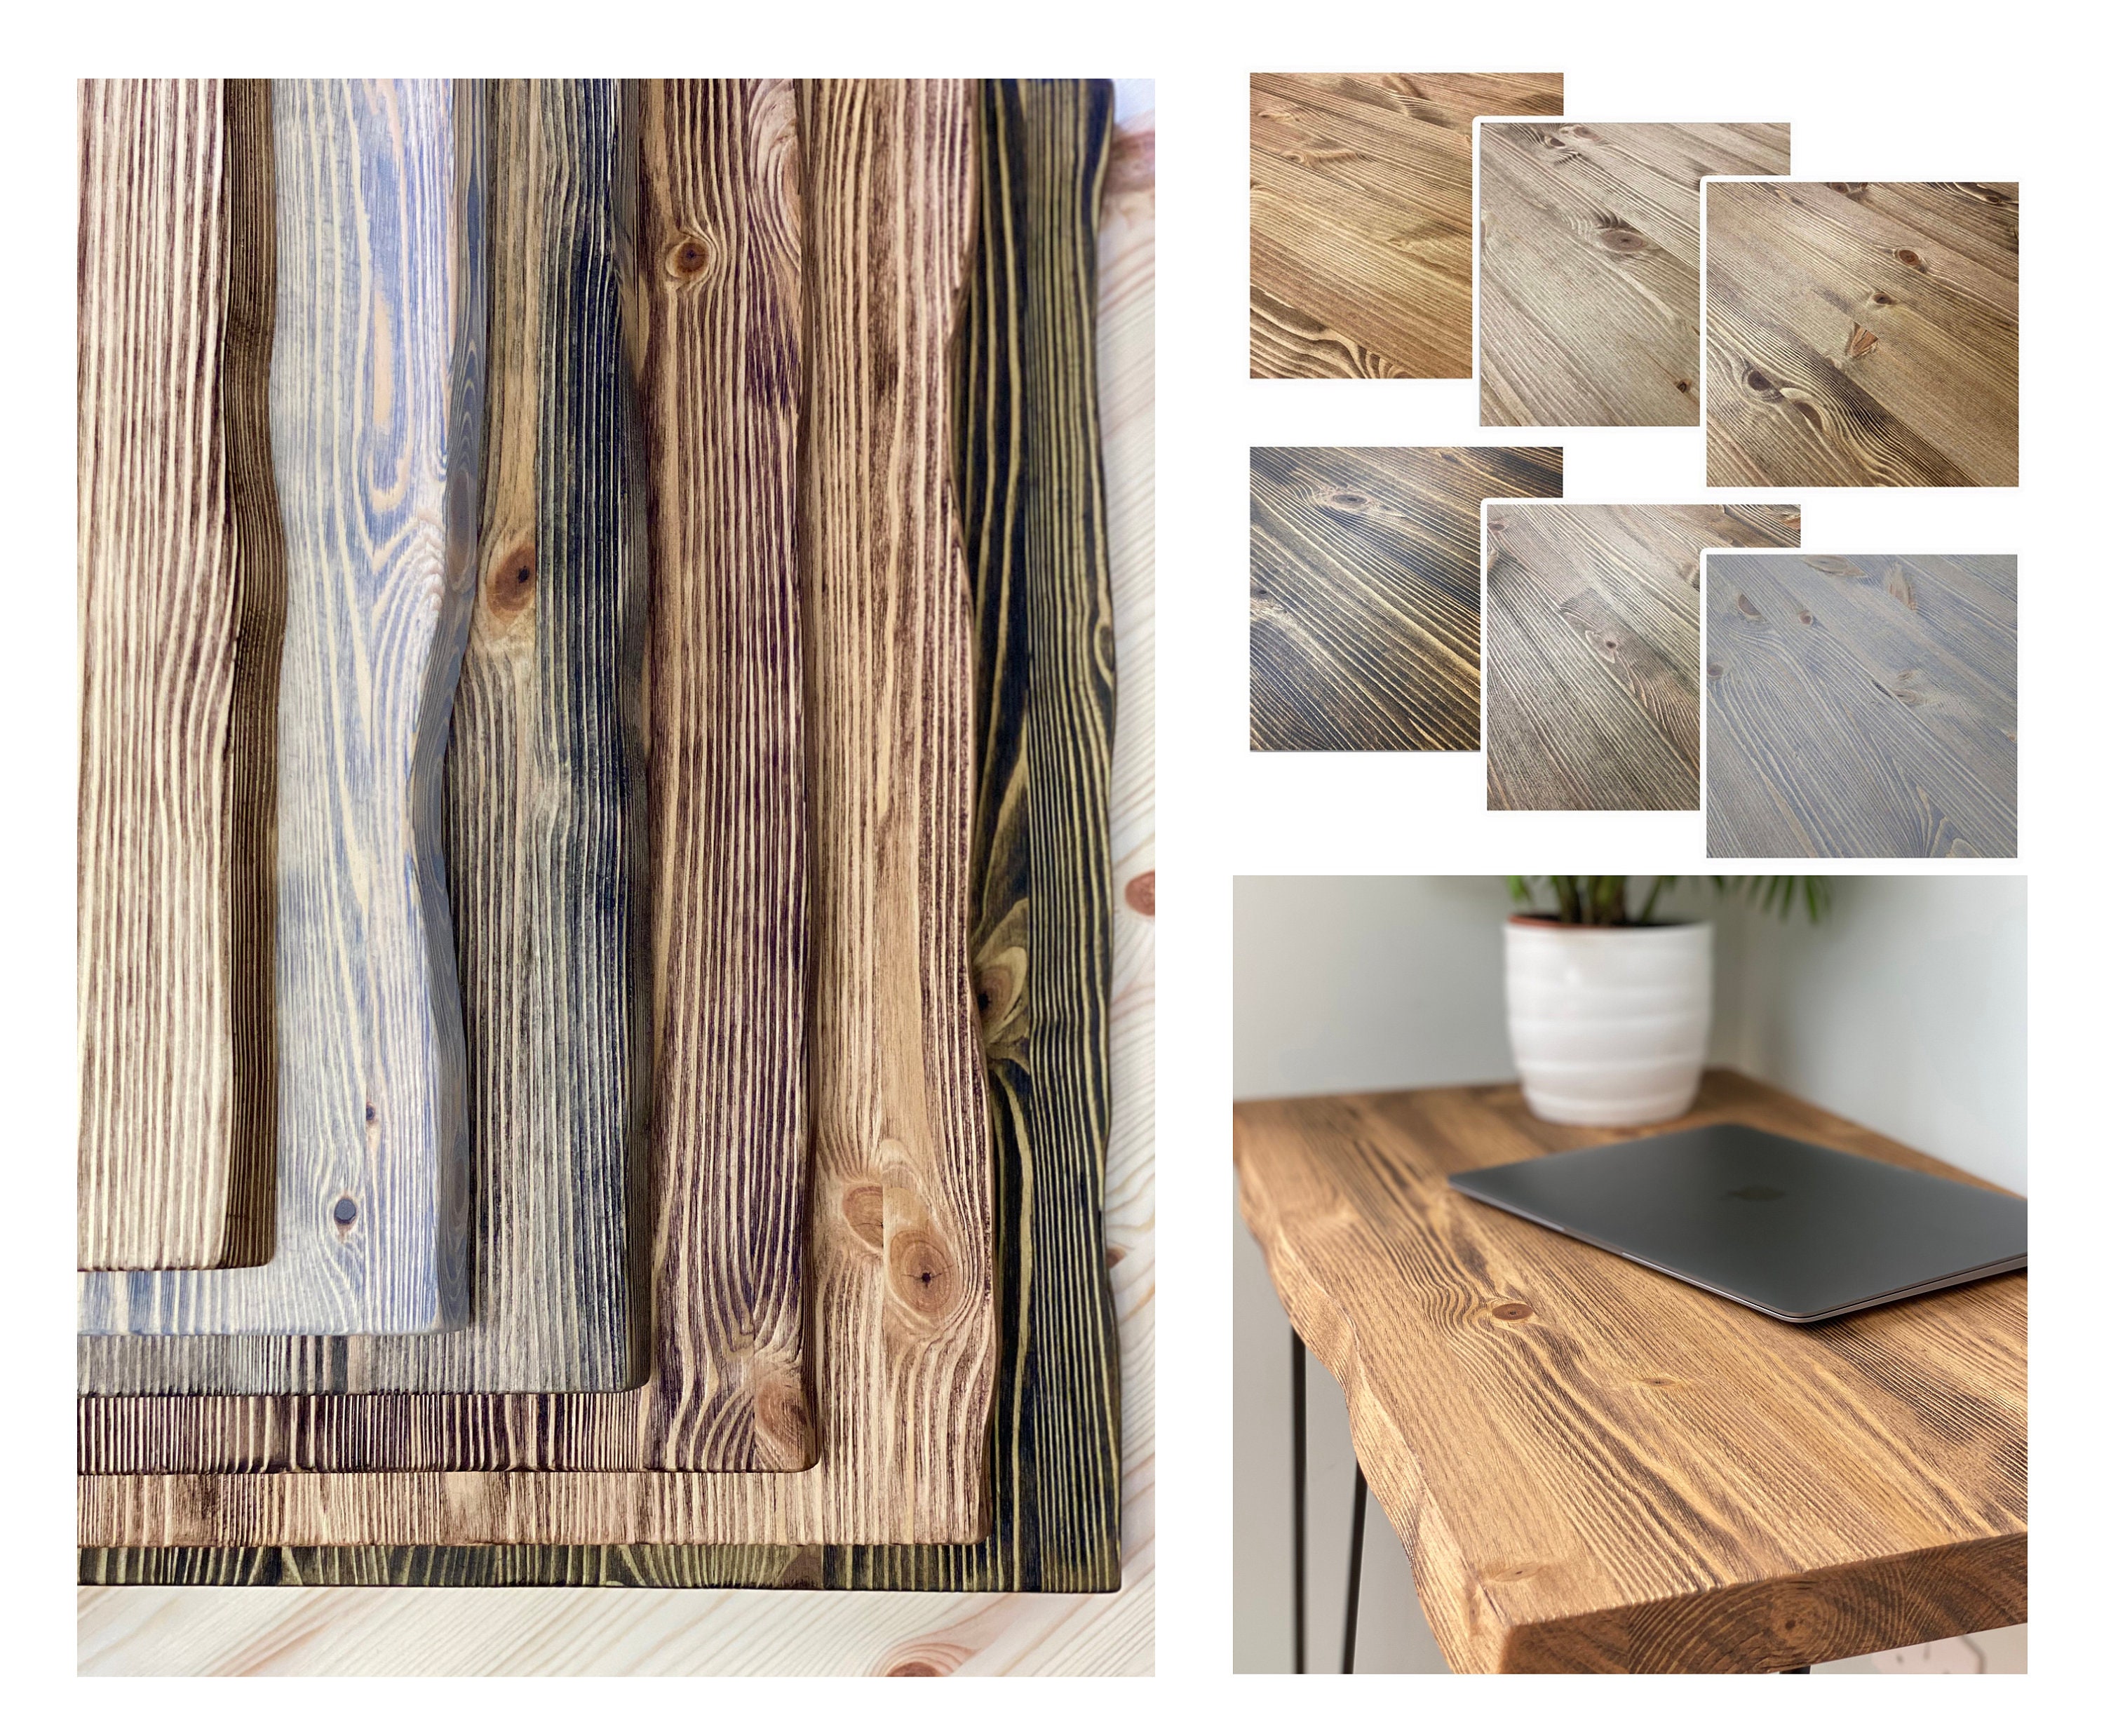 Tablero de madera de pino para mesa comedor 160x80 cm, gran grosor de 3,5 cm